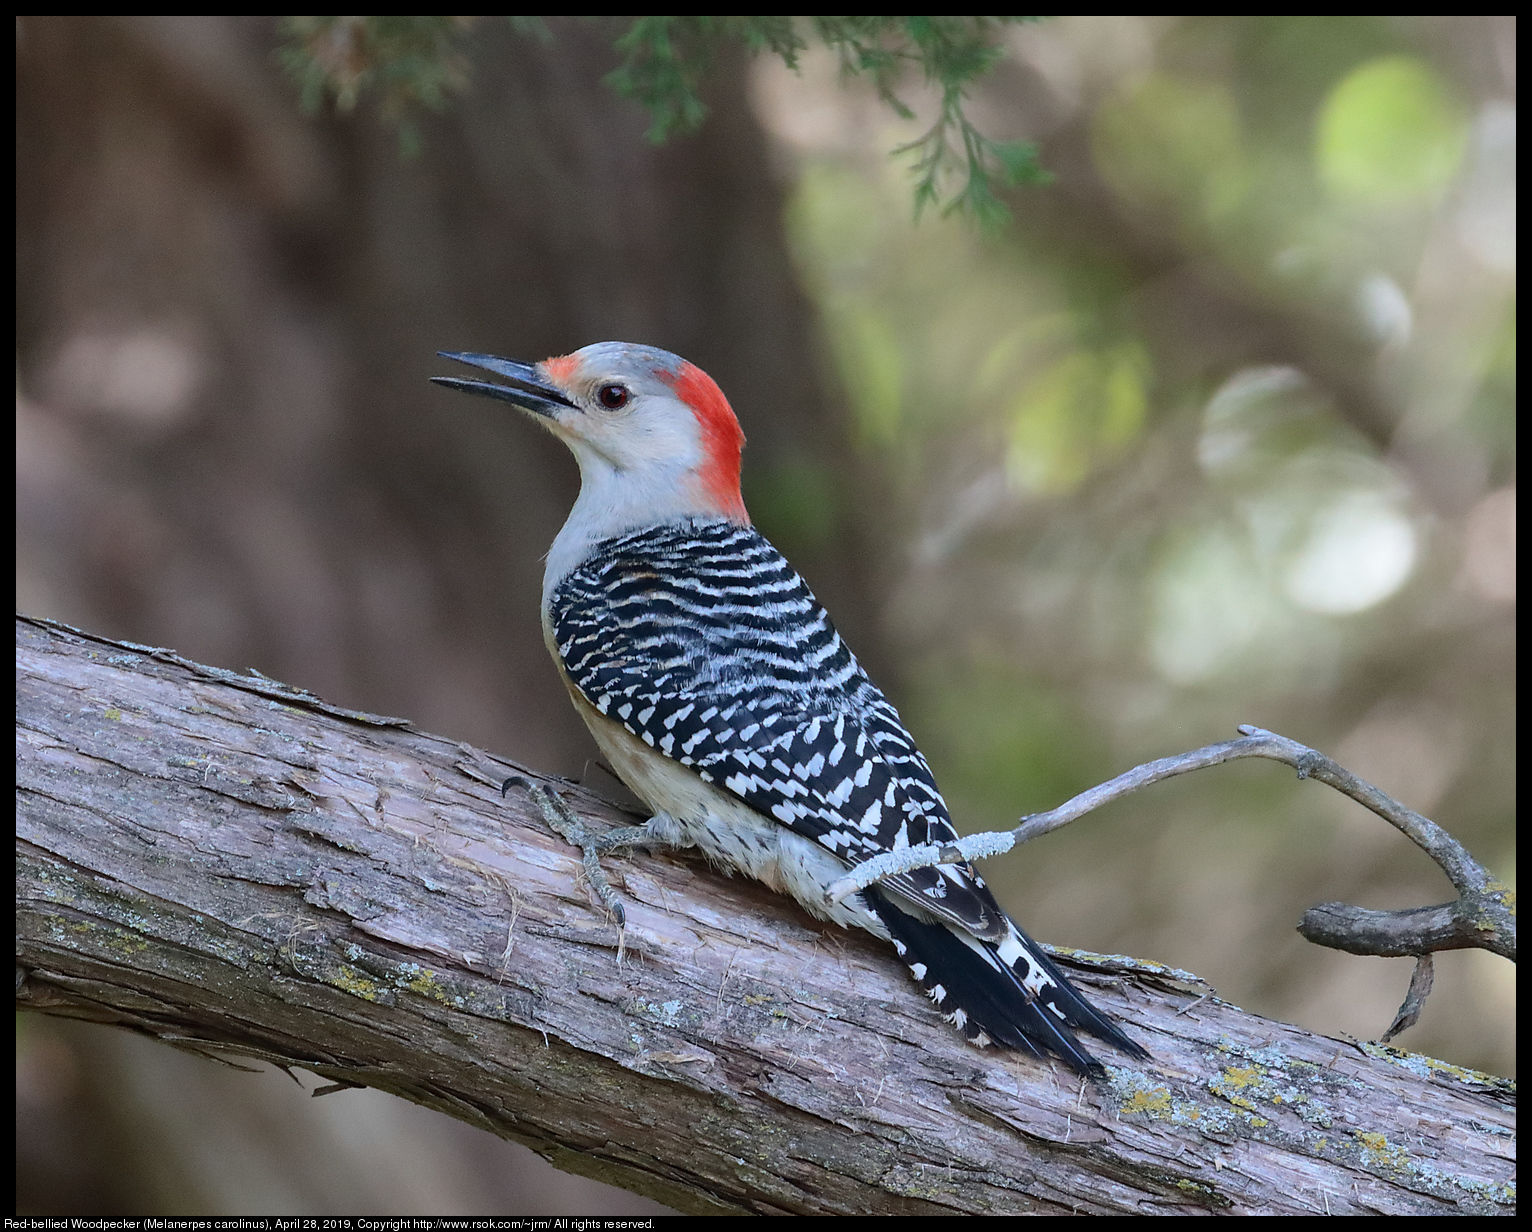 Red-bellied Woodpecker (Melanerpes carolinus), April 28, 2019